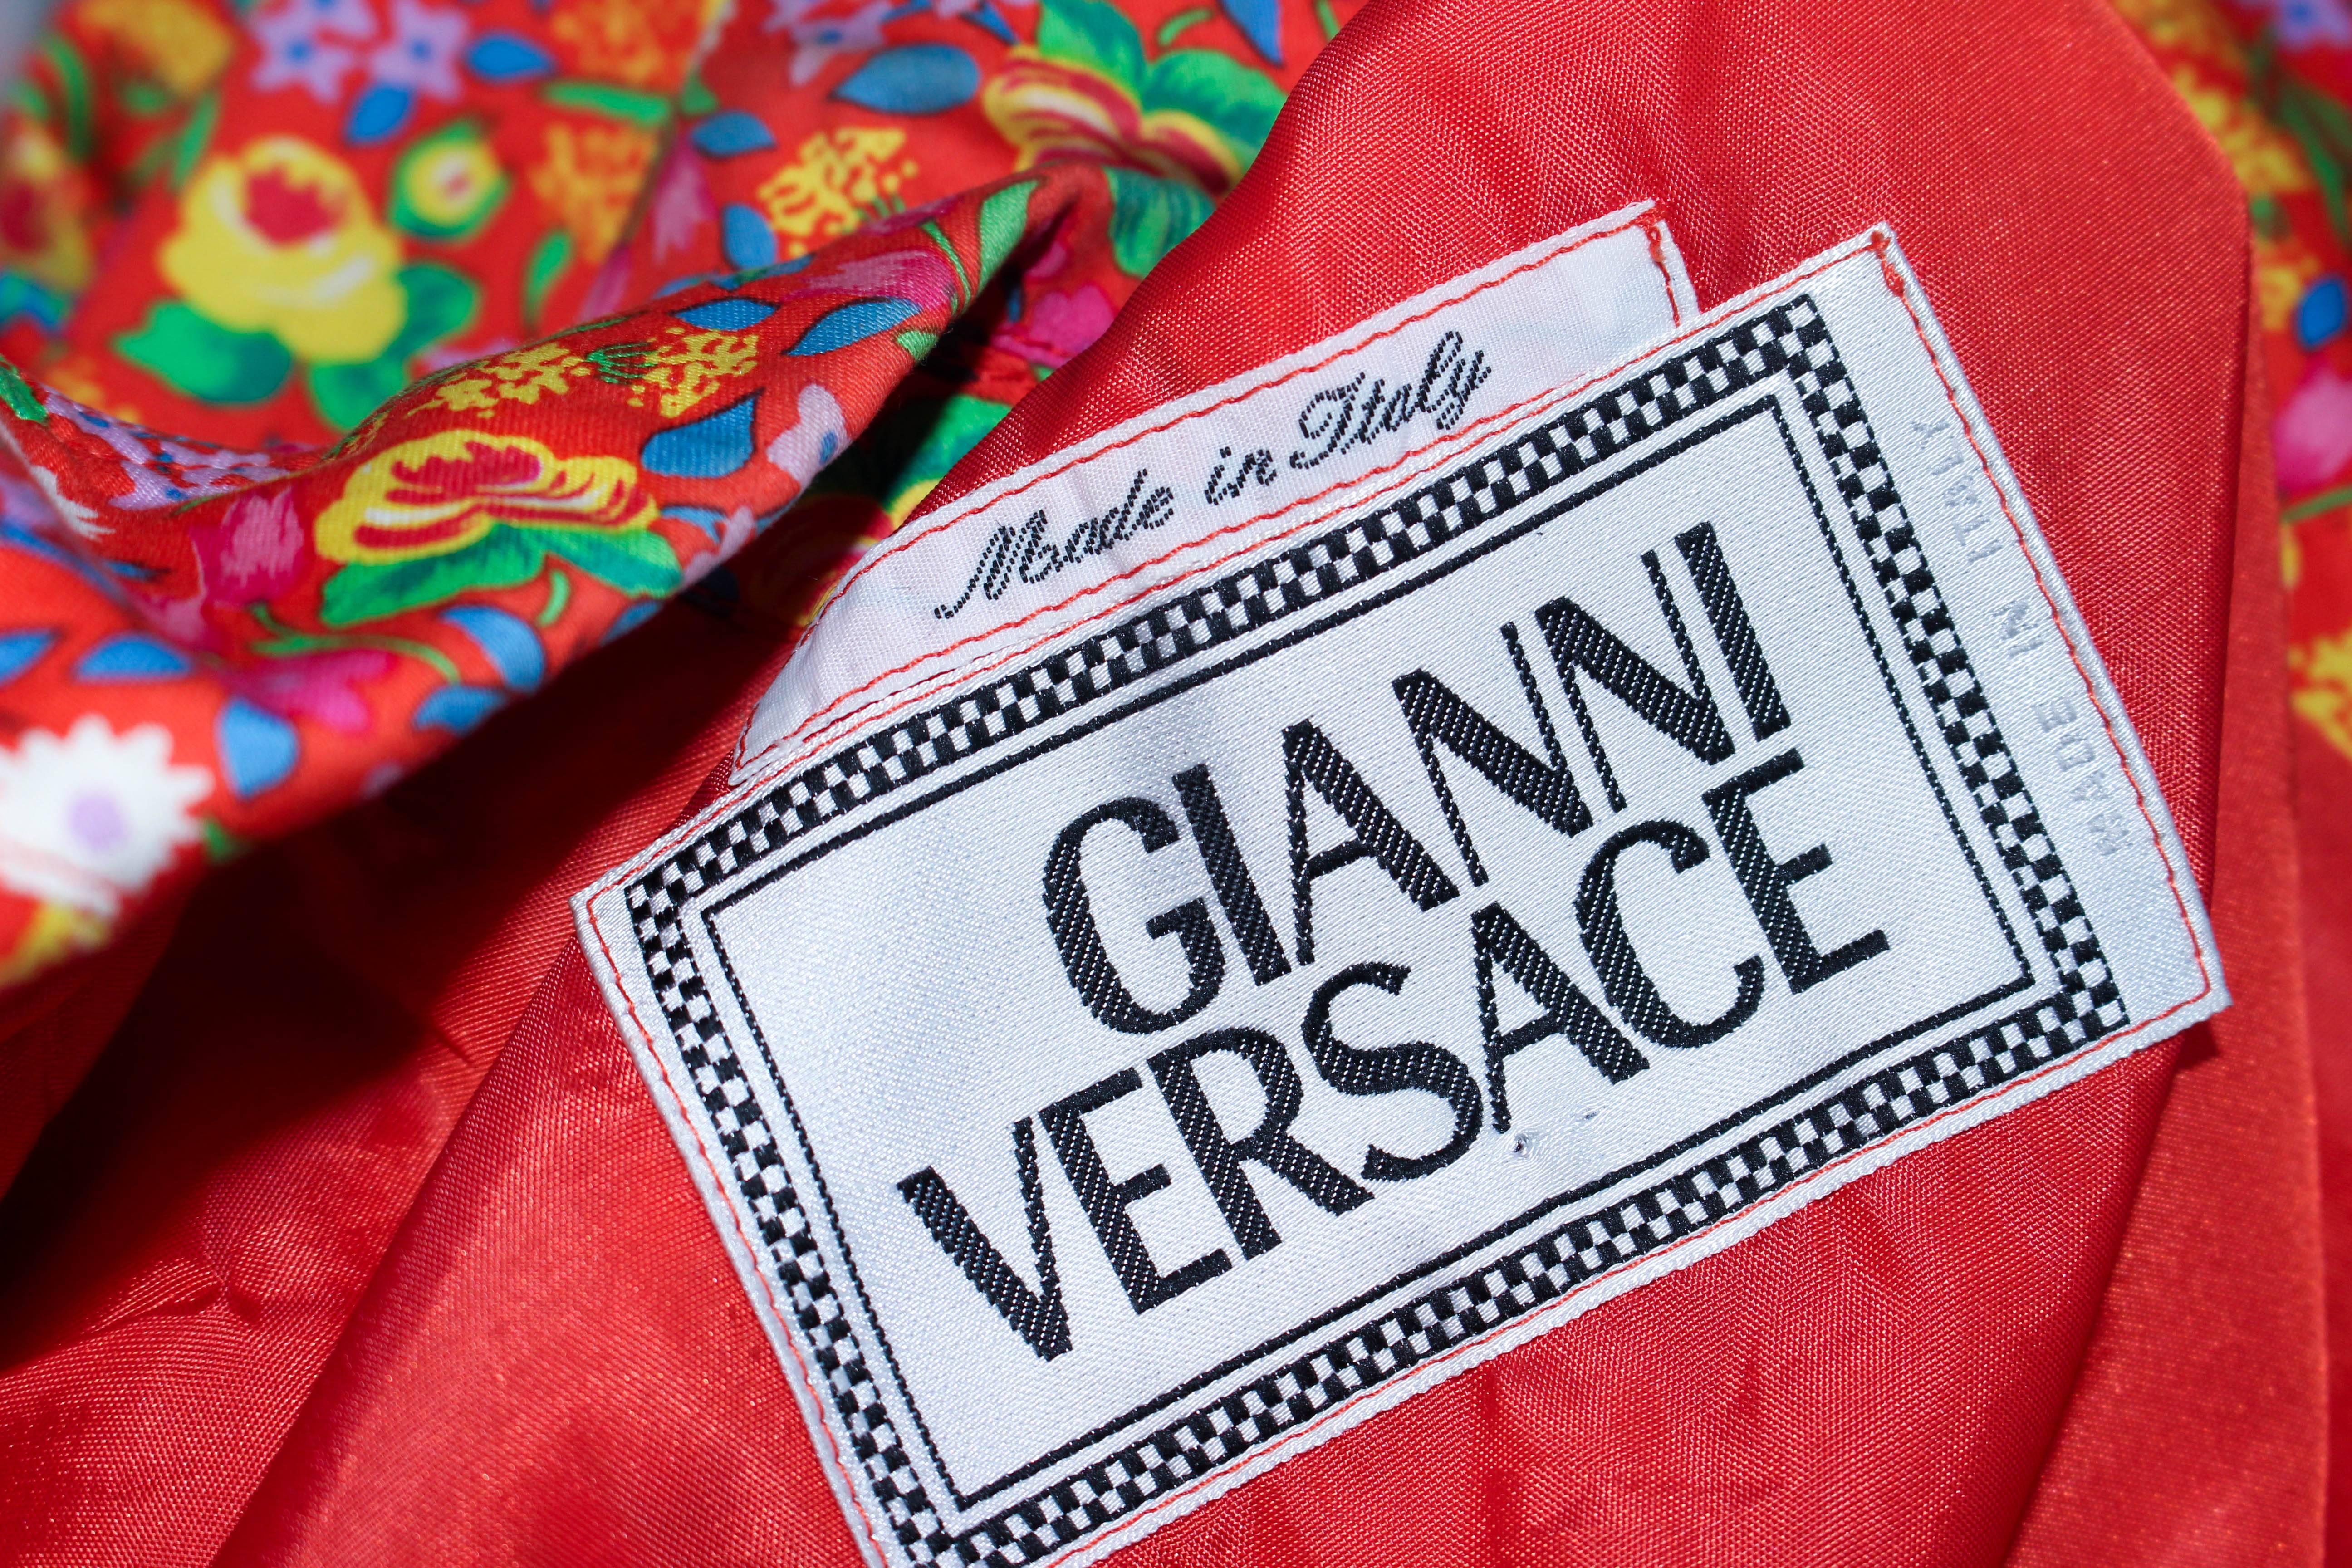 GIANNI VERSACE Vintage Floral Print Blazer with Medusa Buttons Size 8 10 For Sale 2